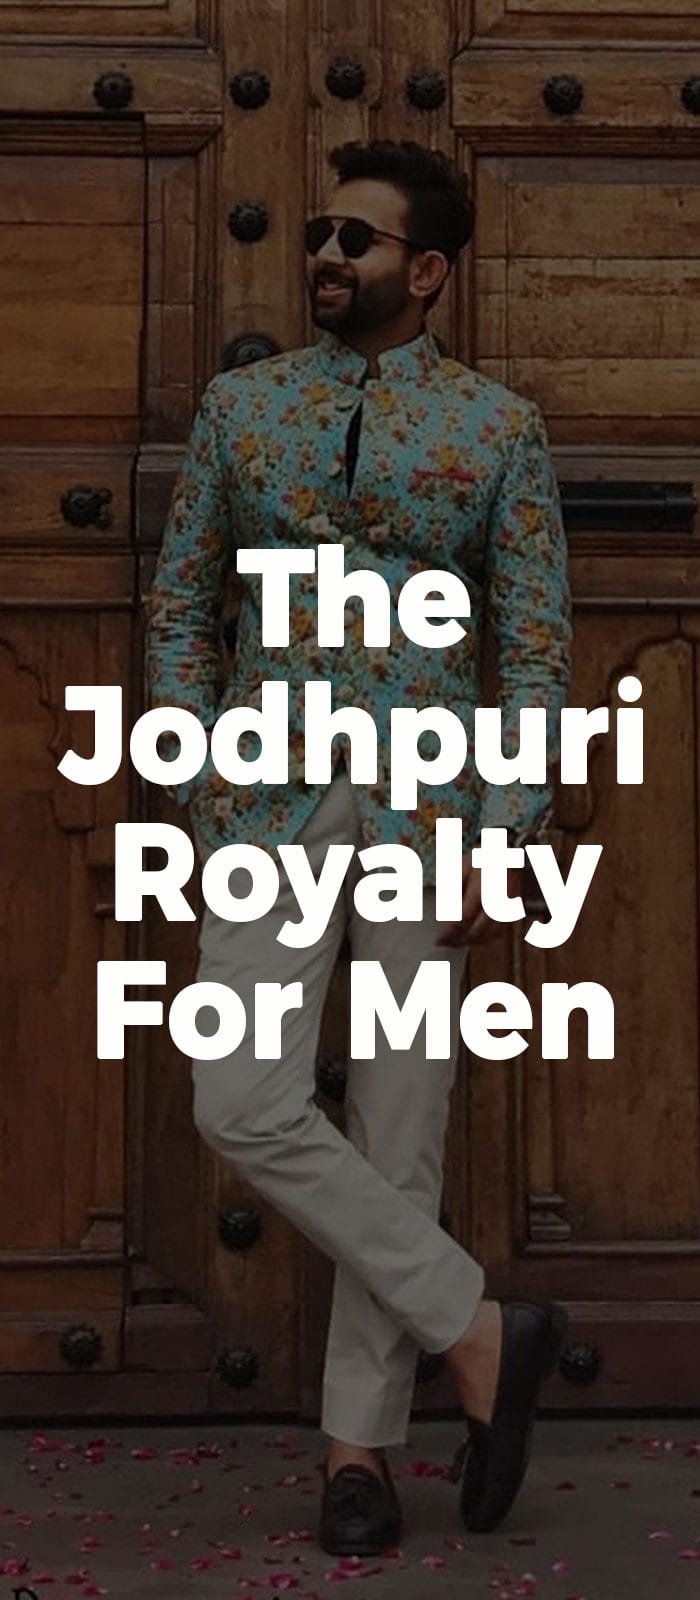 The Jodhpuri Royalty For Men